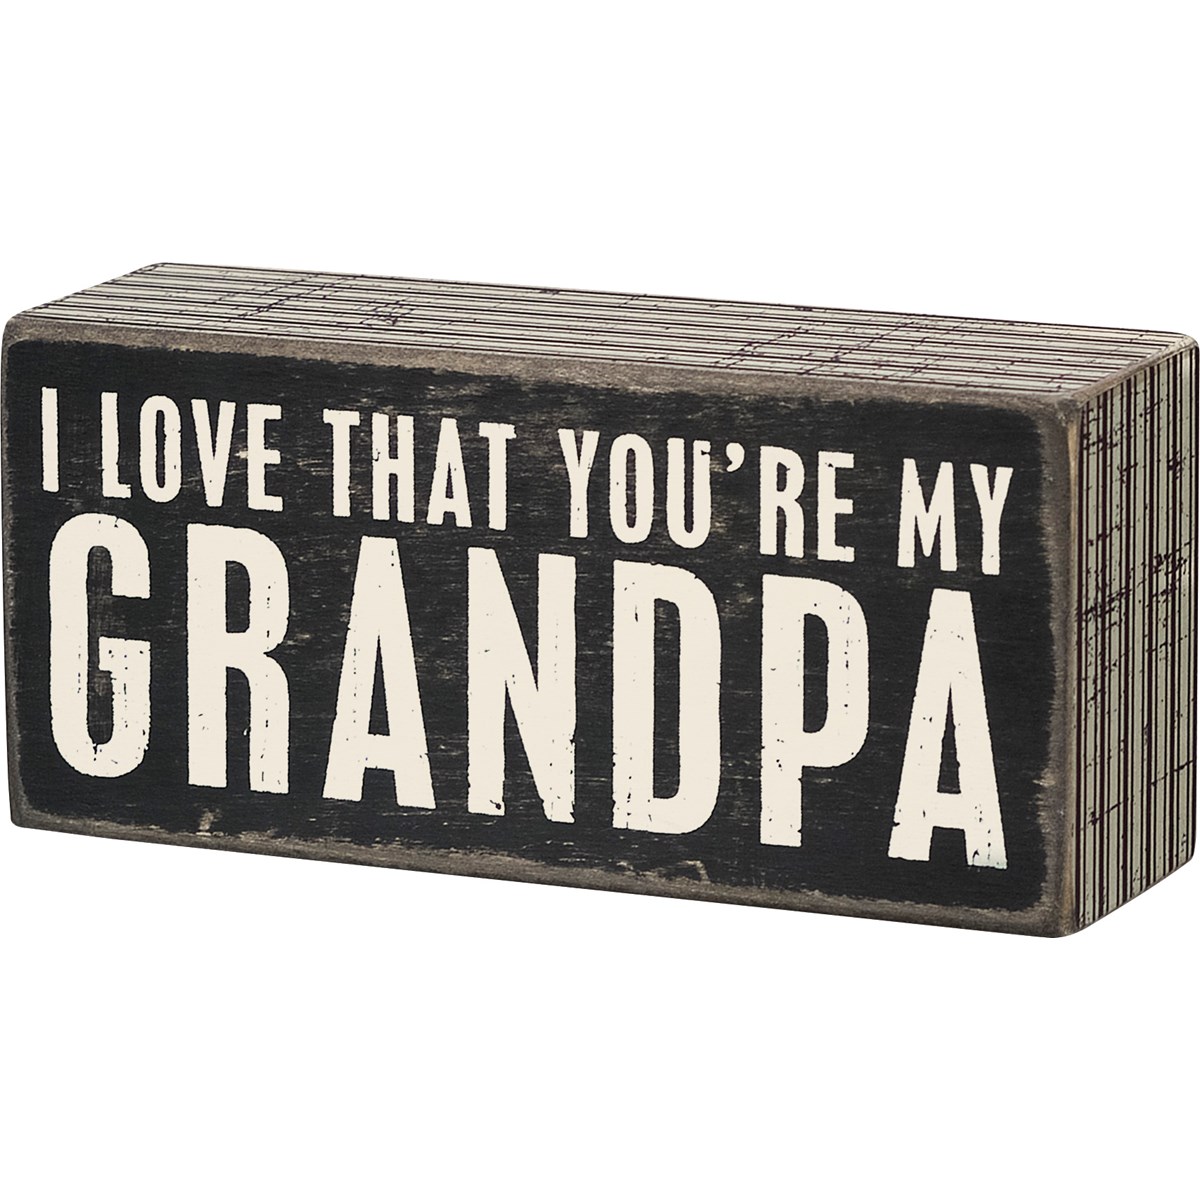 My Grandpa Box Sign - Wood, Paper